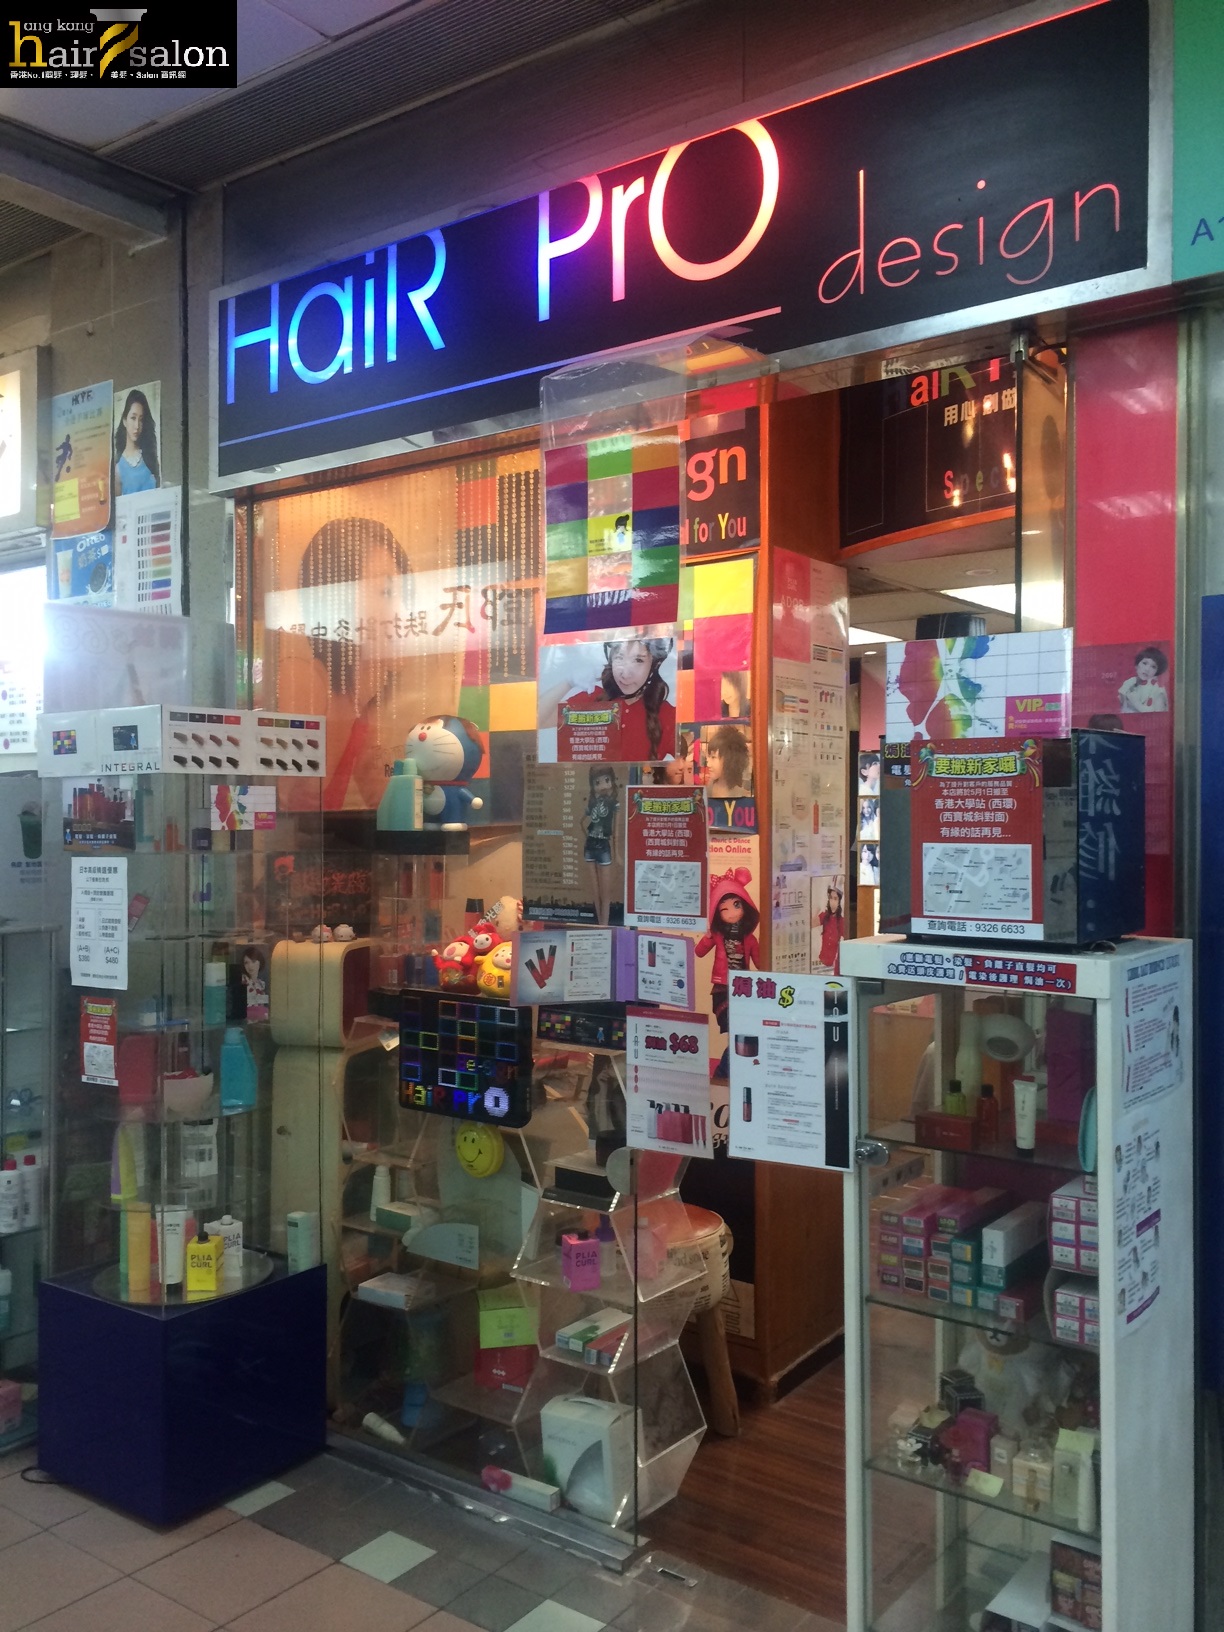 髮型屋: Hair Pro Design